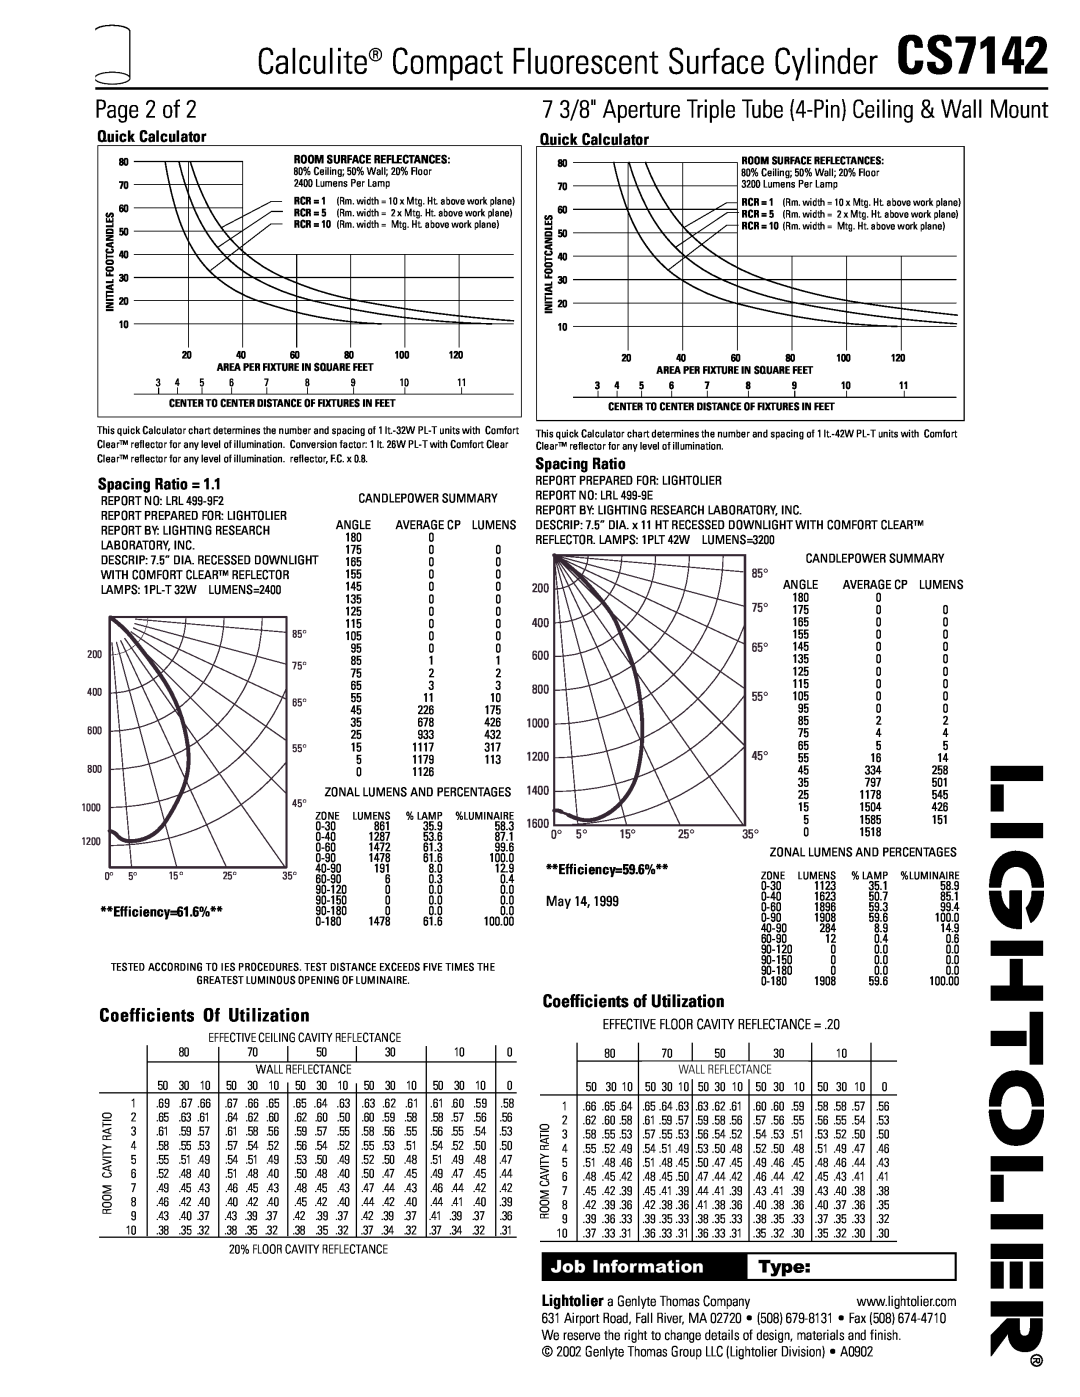 Lightolier CS7142 Page 2 of, Quick Calculator, Spacing Ratio =, Coefficients Of Utilization, Job Information, Type 